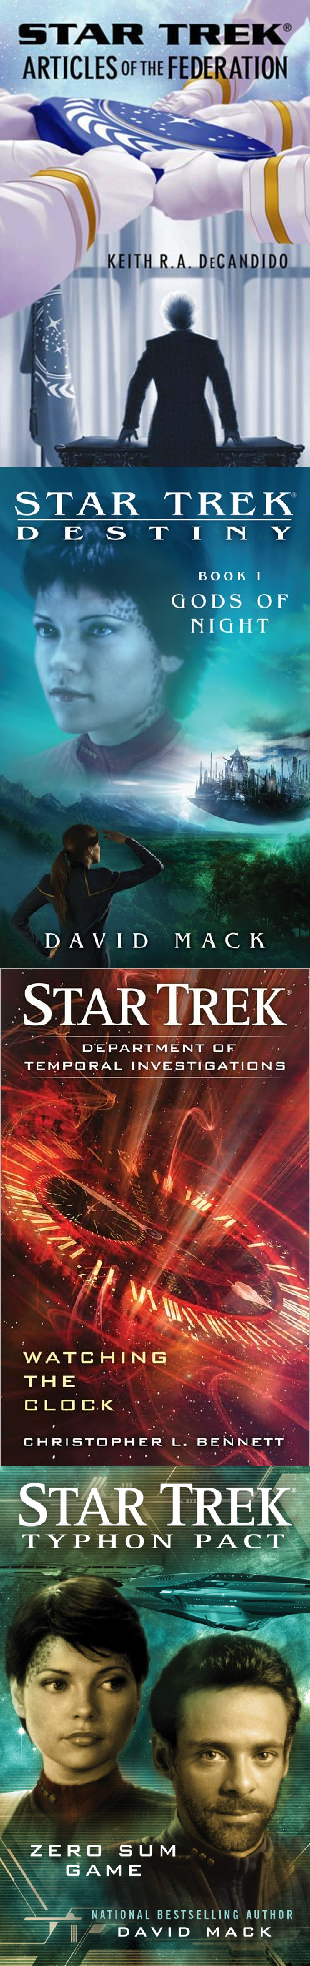 star trek prey book three the hall of heroes torrent